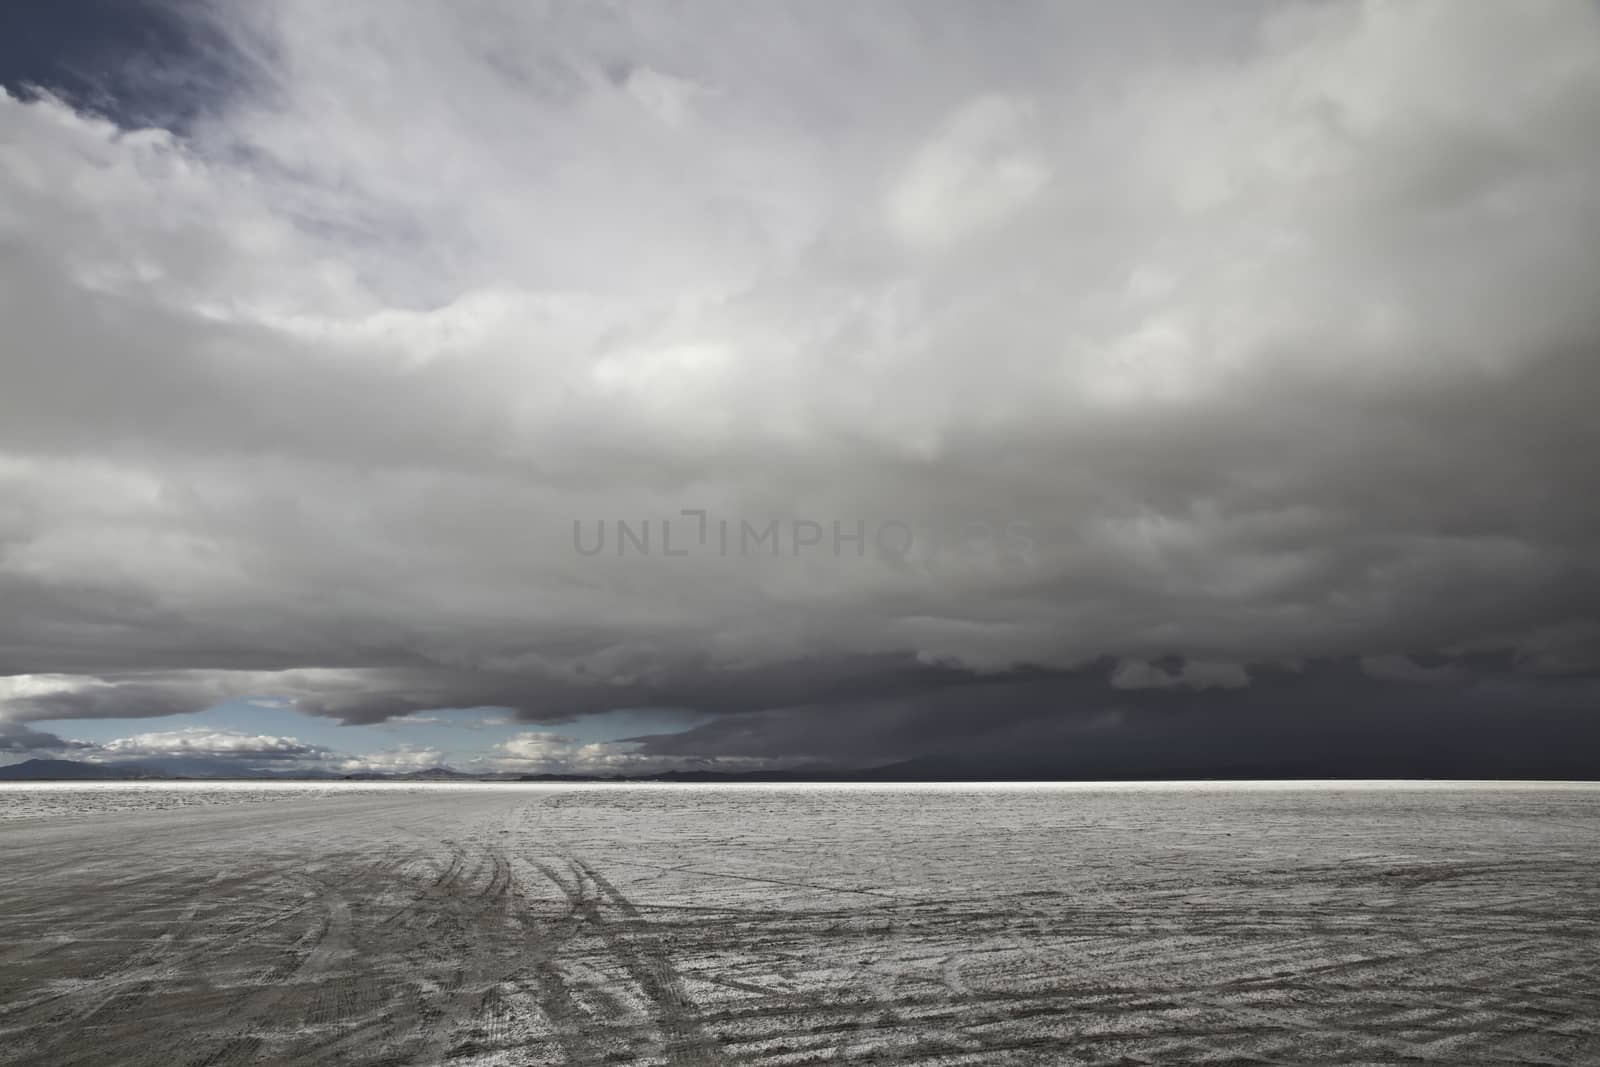 Wendover, Bonneville Salt Flats, Utah, United States by Tjeerdkruse